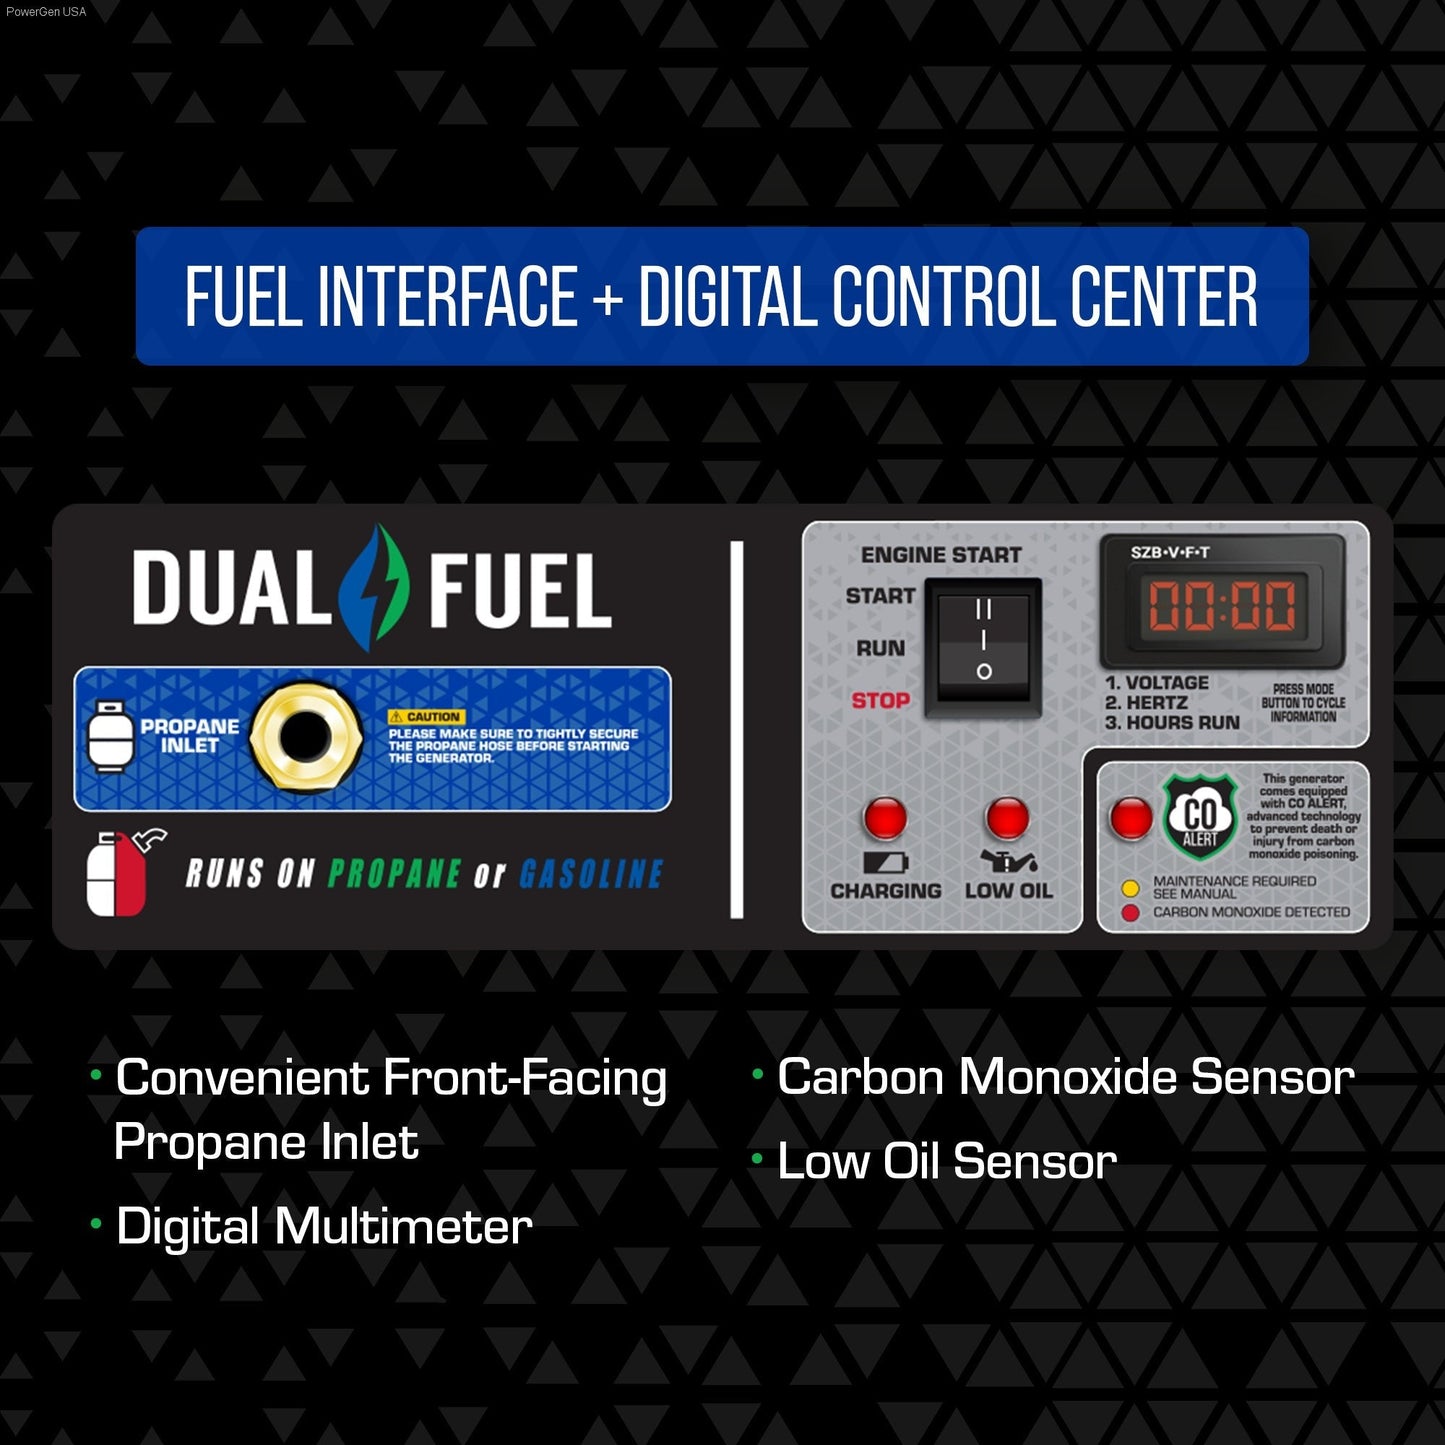 Dual Fuel Hybrid - DuroMax XP5500HX 5,500 Watt Dual Fuel Portable HX Generator W/ CO Alert